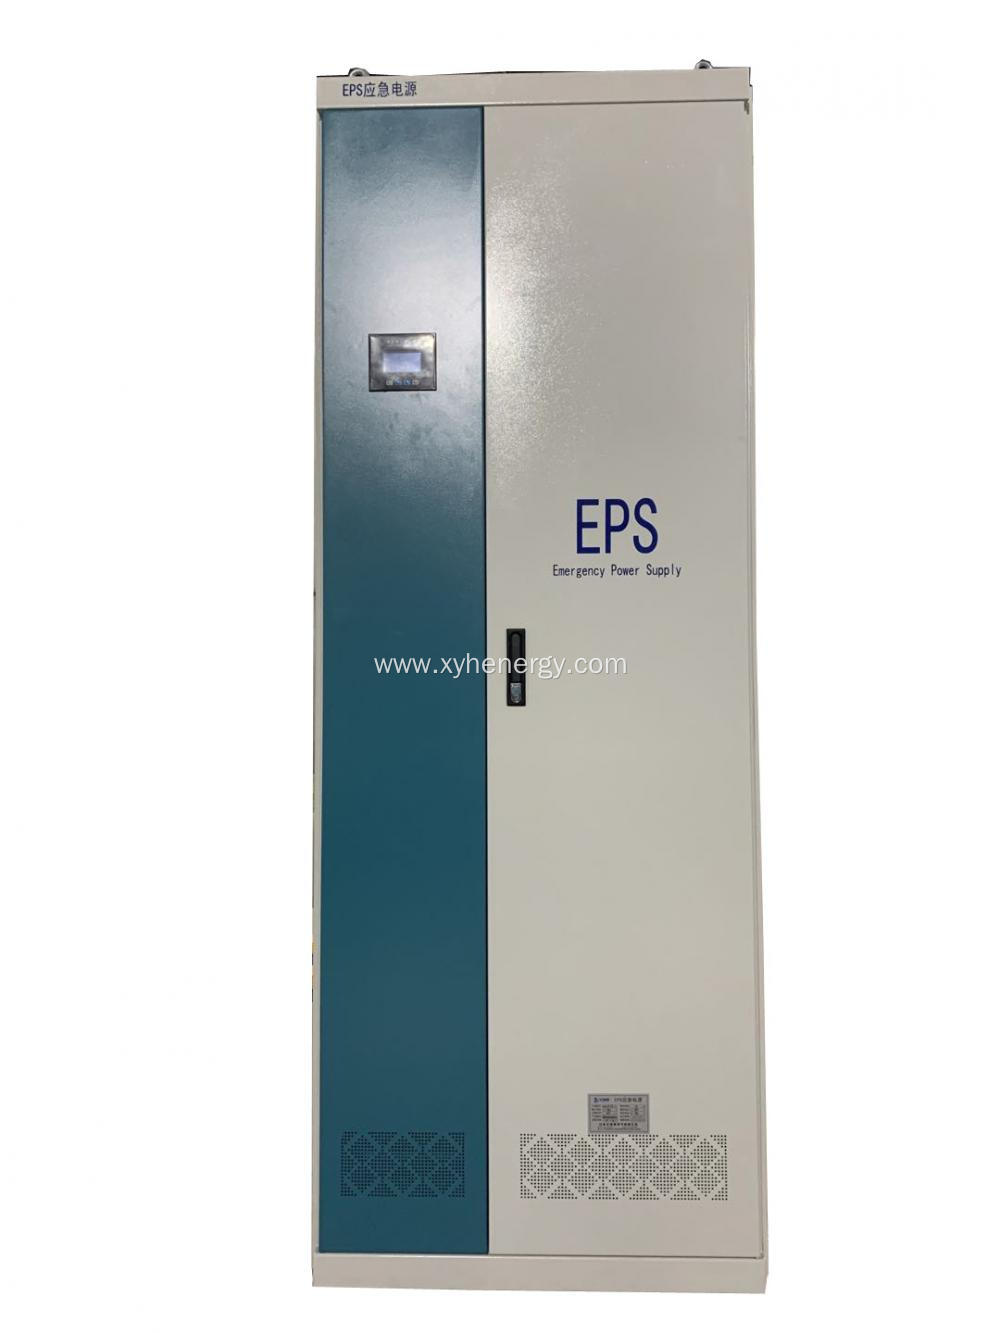 EPS power supply